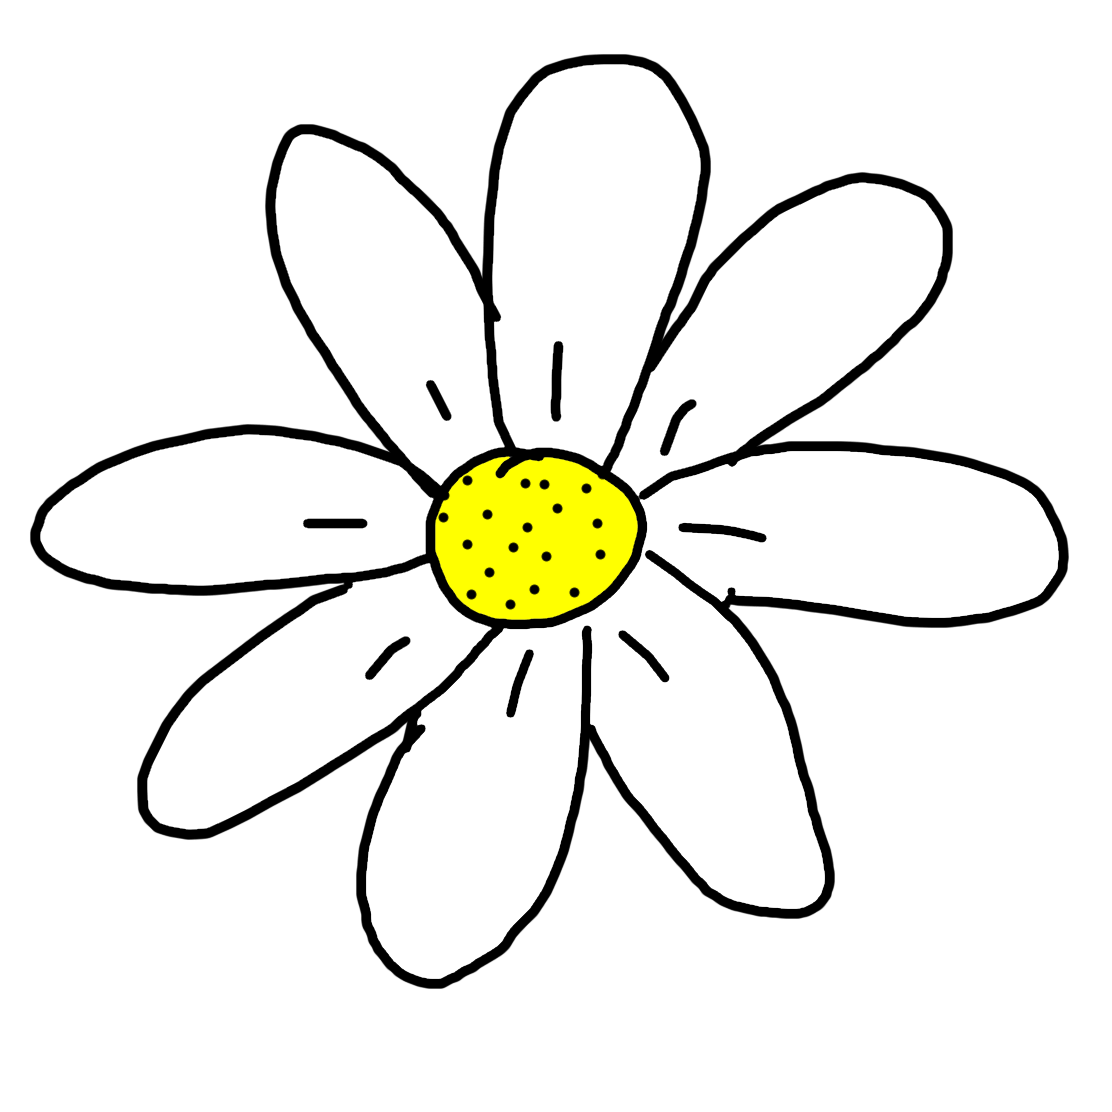 Doodle of a flower